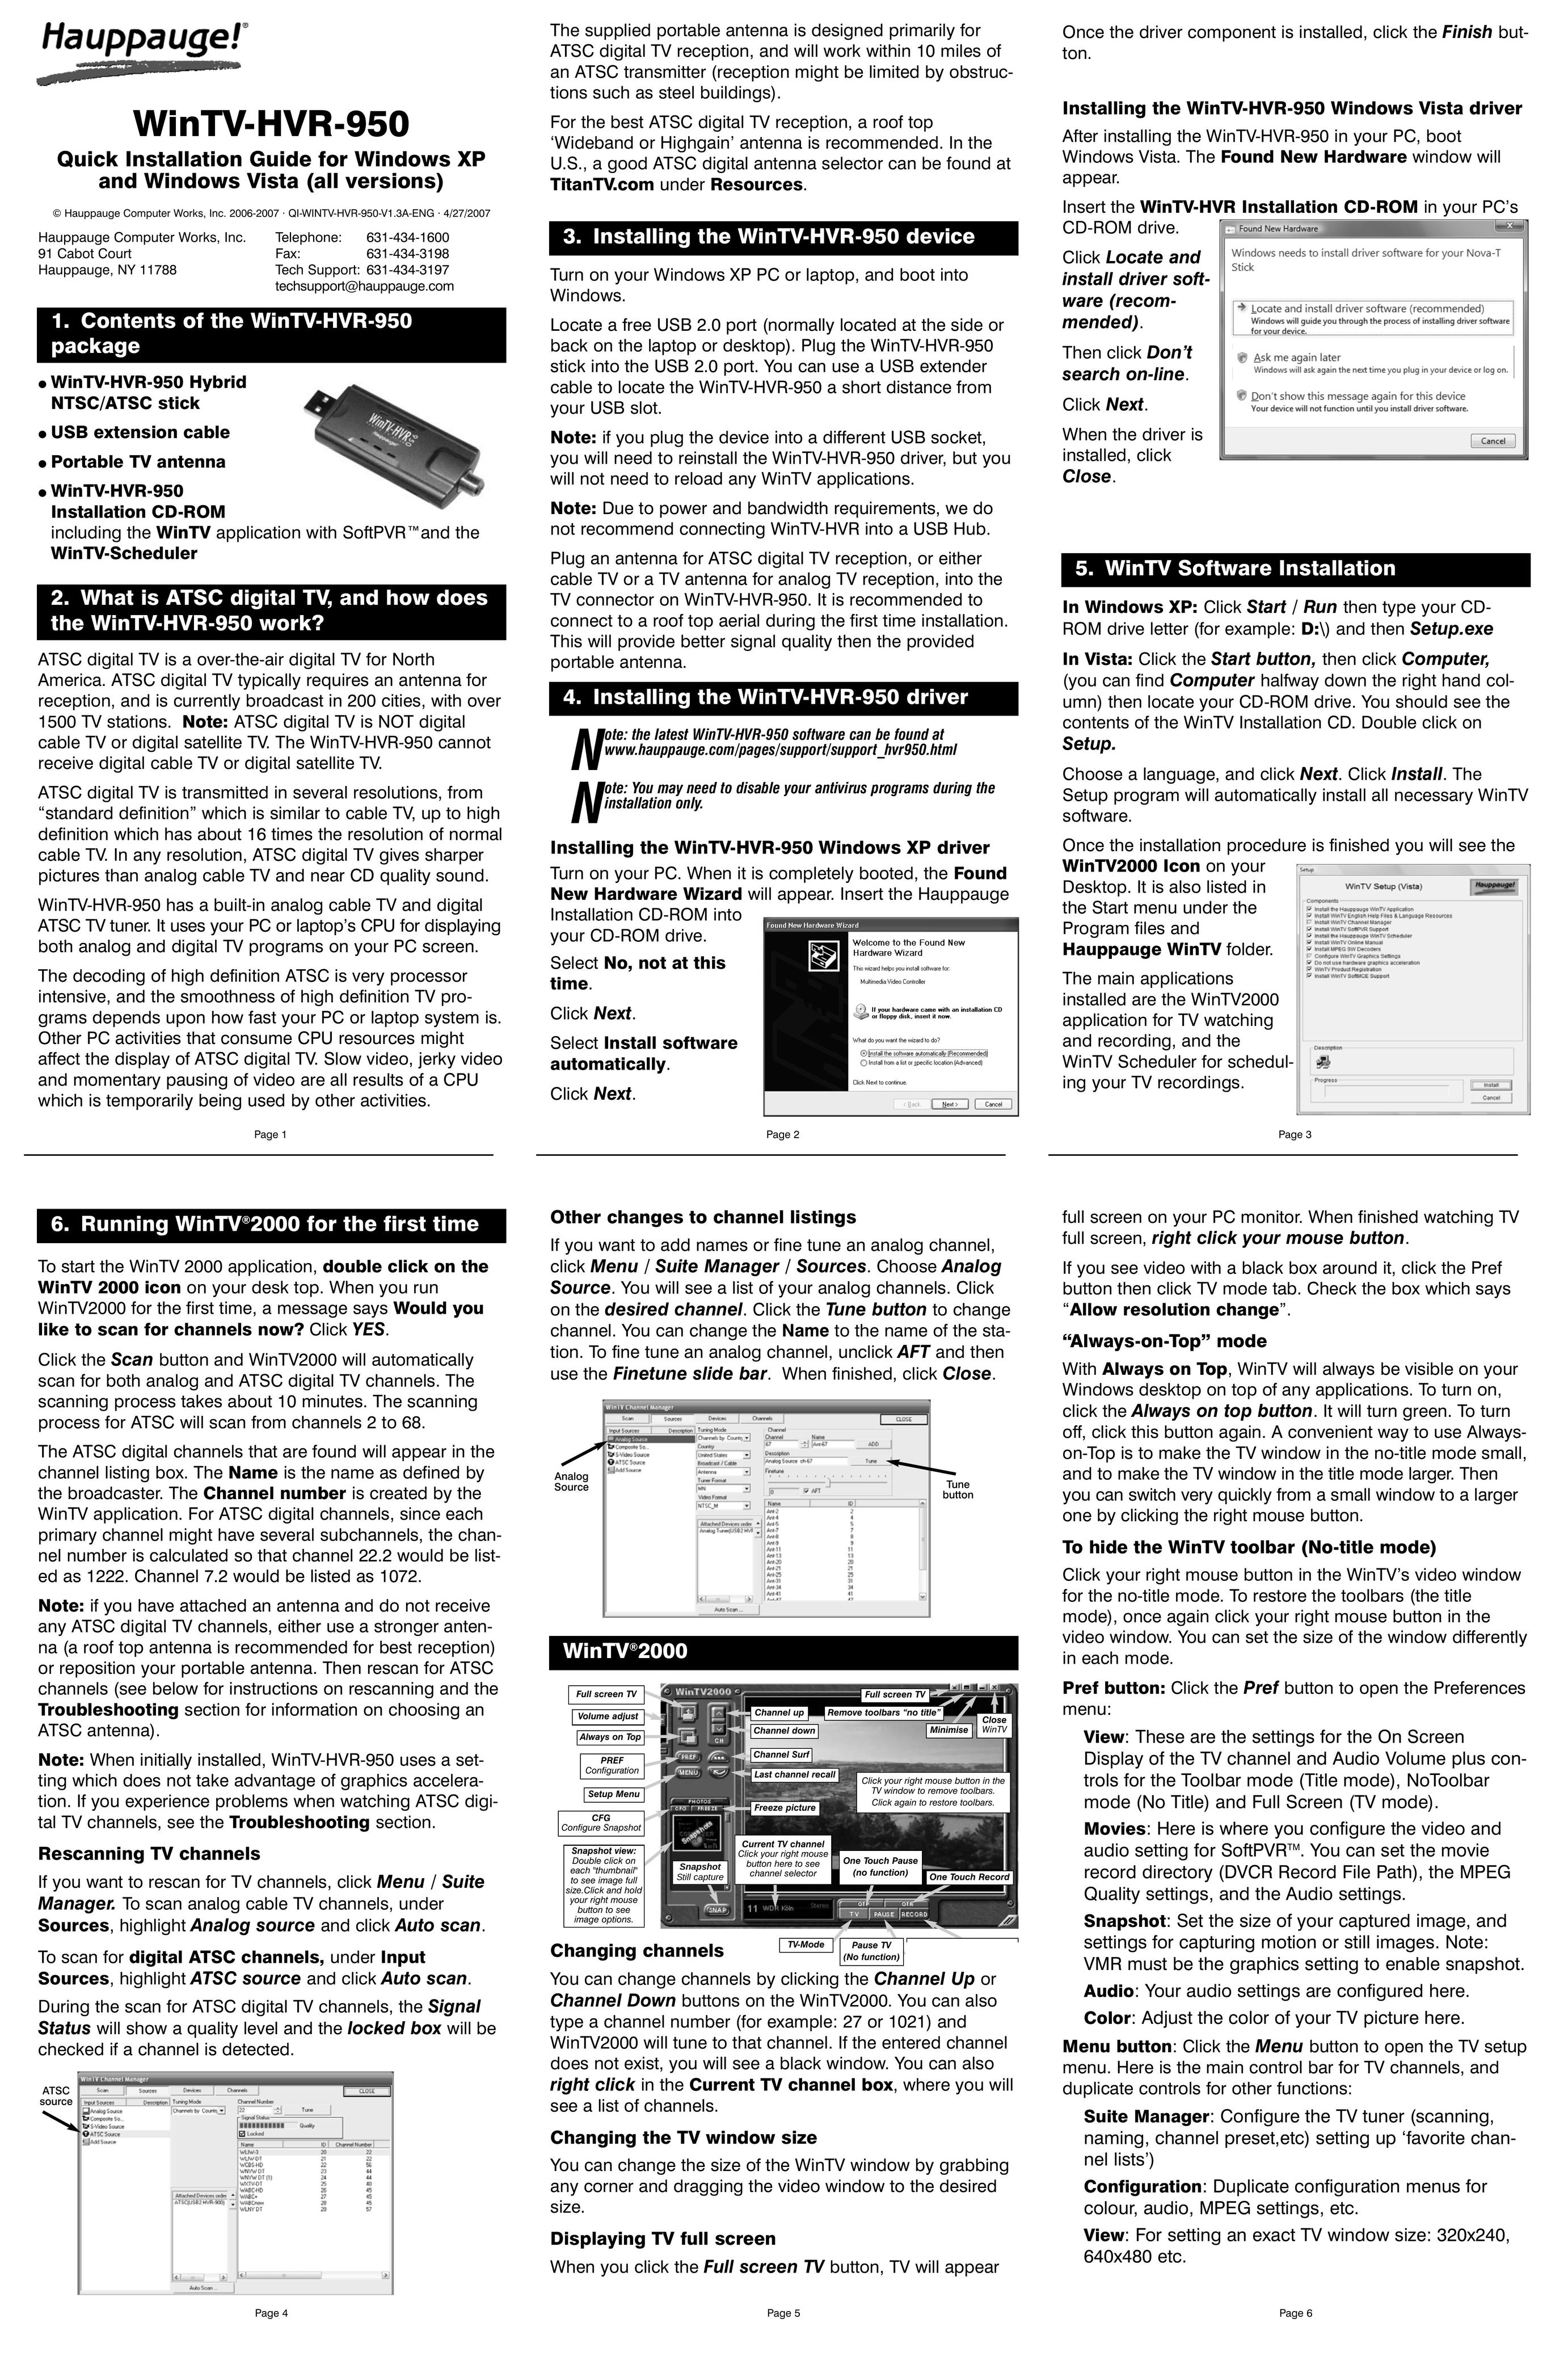 Hauppauge WinTV-HVR-950 Computer Drive User Manual